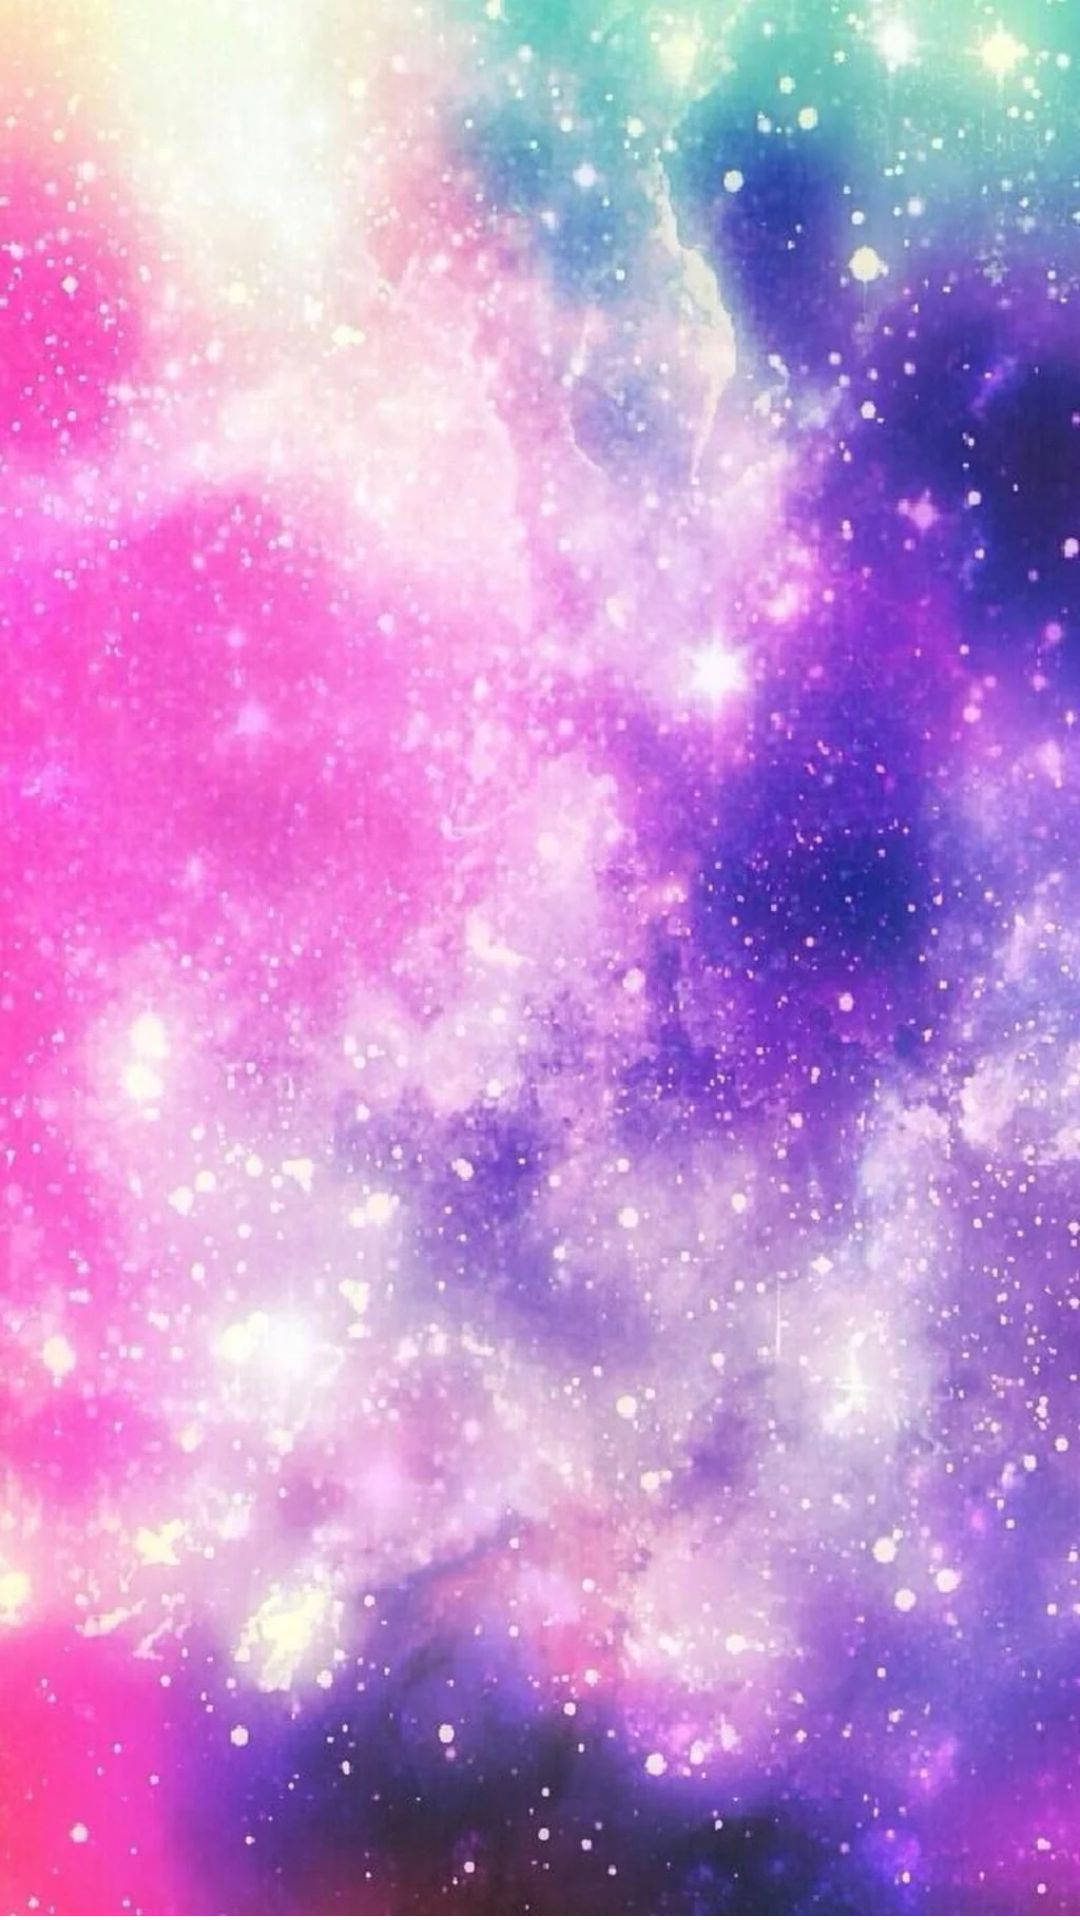 Vibrant Stars In A Cute Galaxy Wallpaper